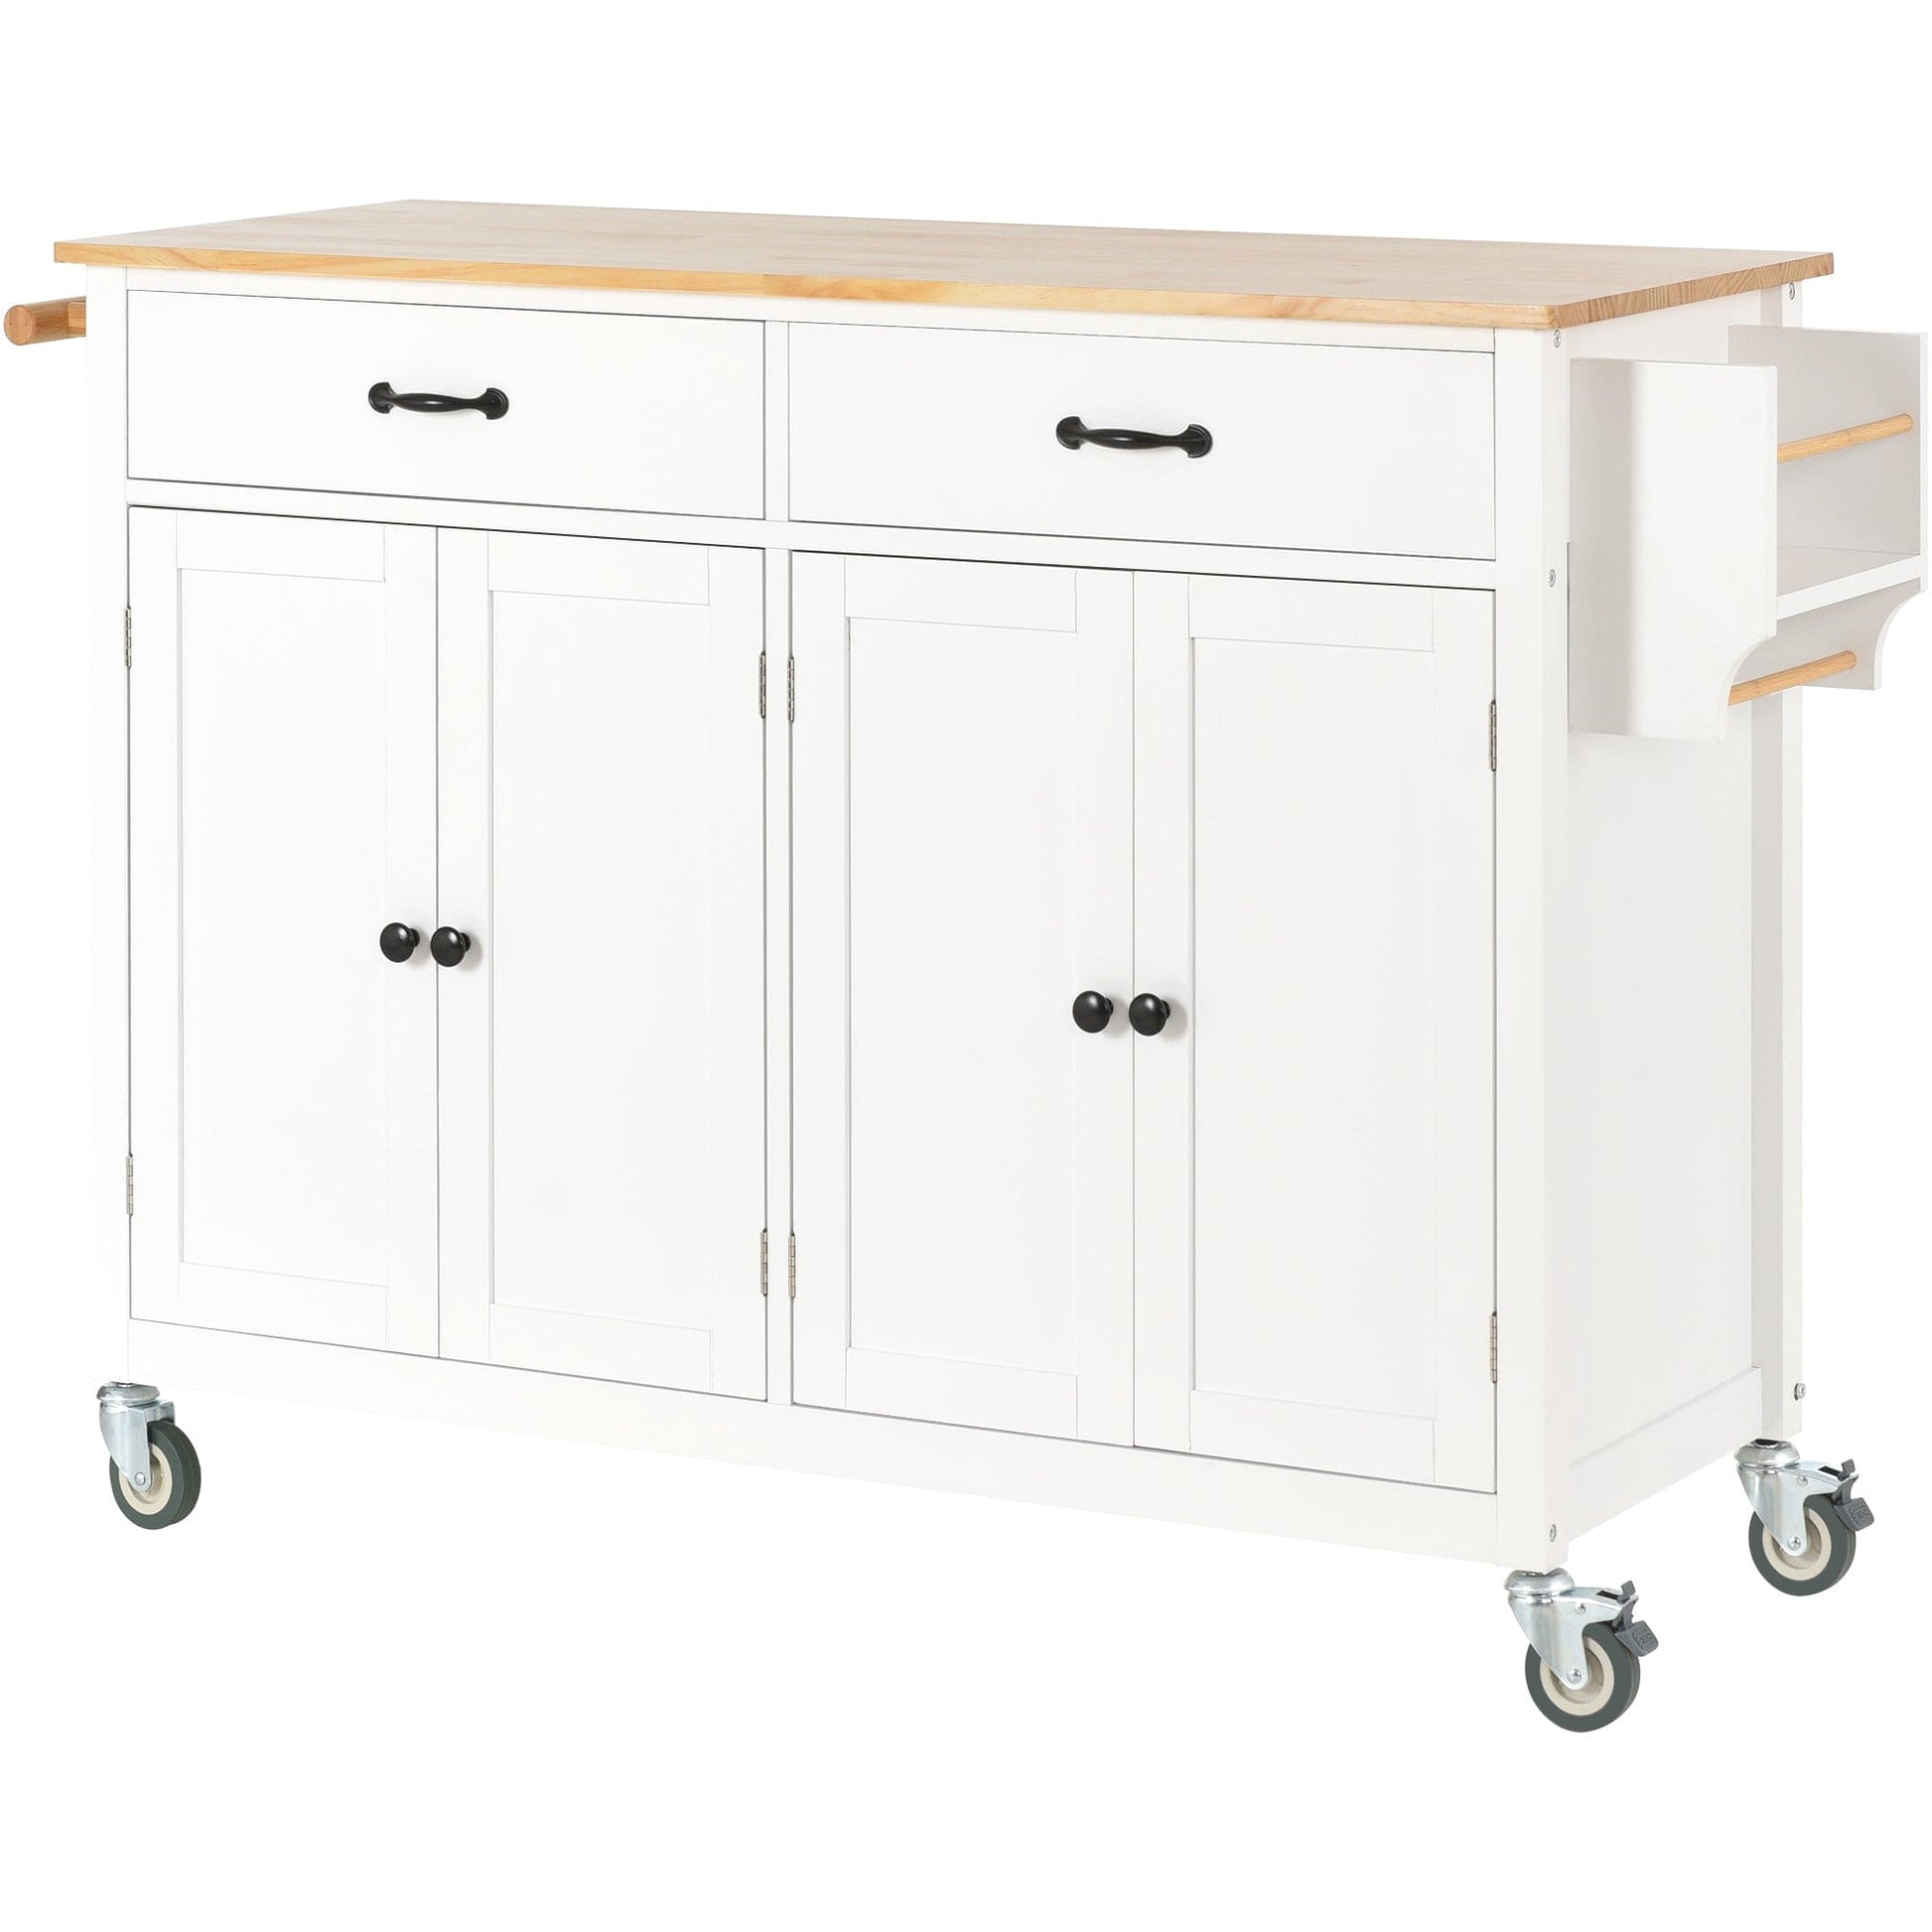 1st Choice Furniture Direct Kitchen Island Cart 1st Choice Kitchen Island Cart w/4-Door Cabinet, 2 Drawers, Towel Rack